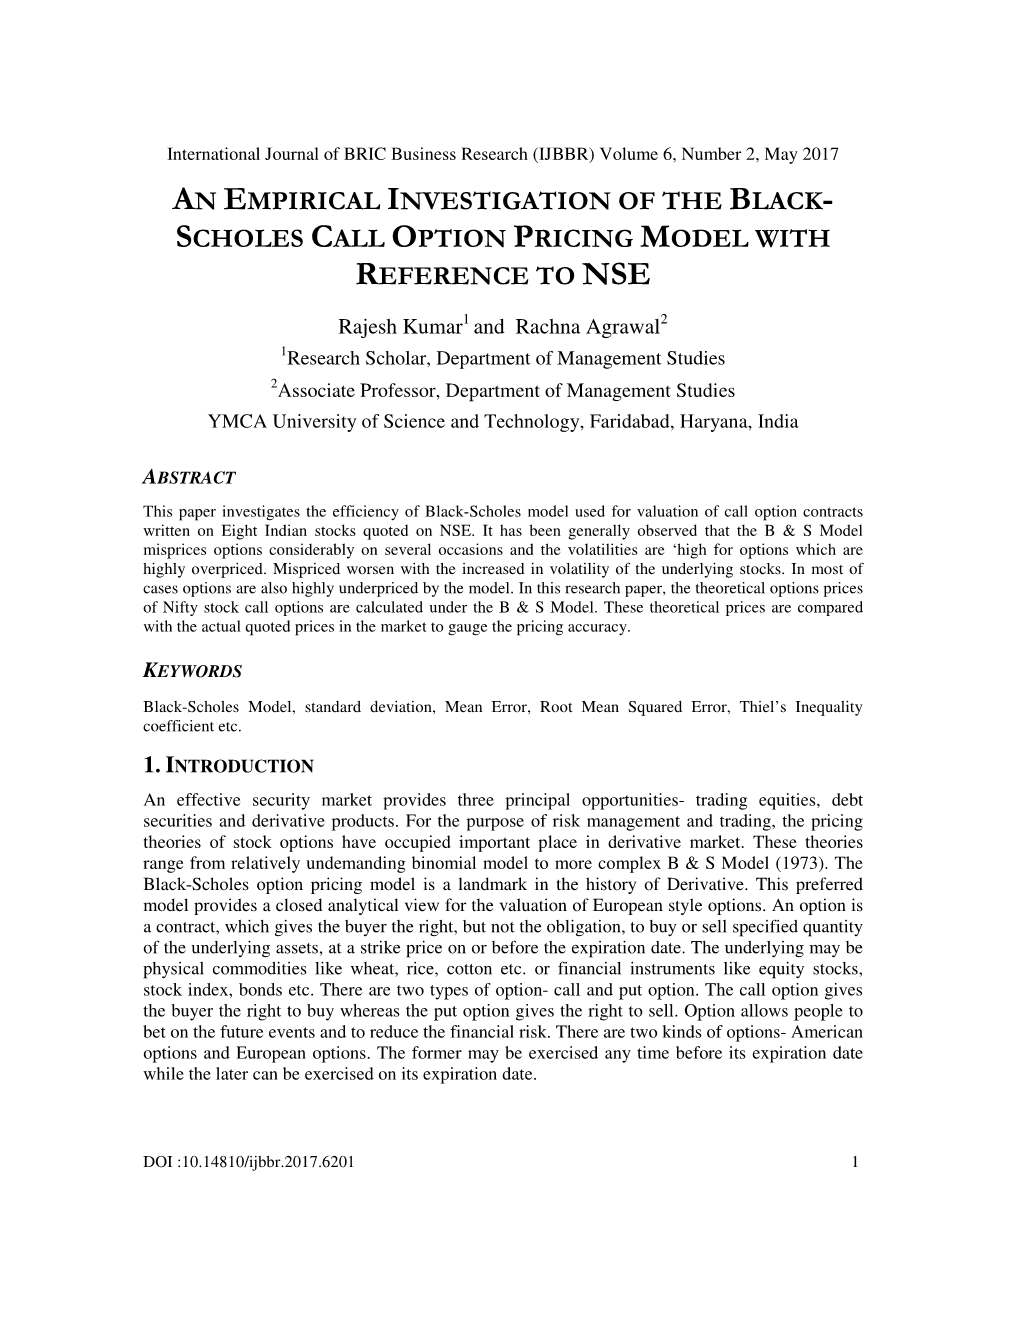 An Empirical Investigation of the Black- Scholes Call